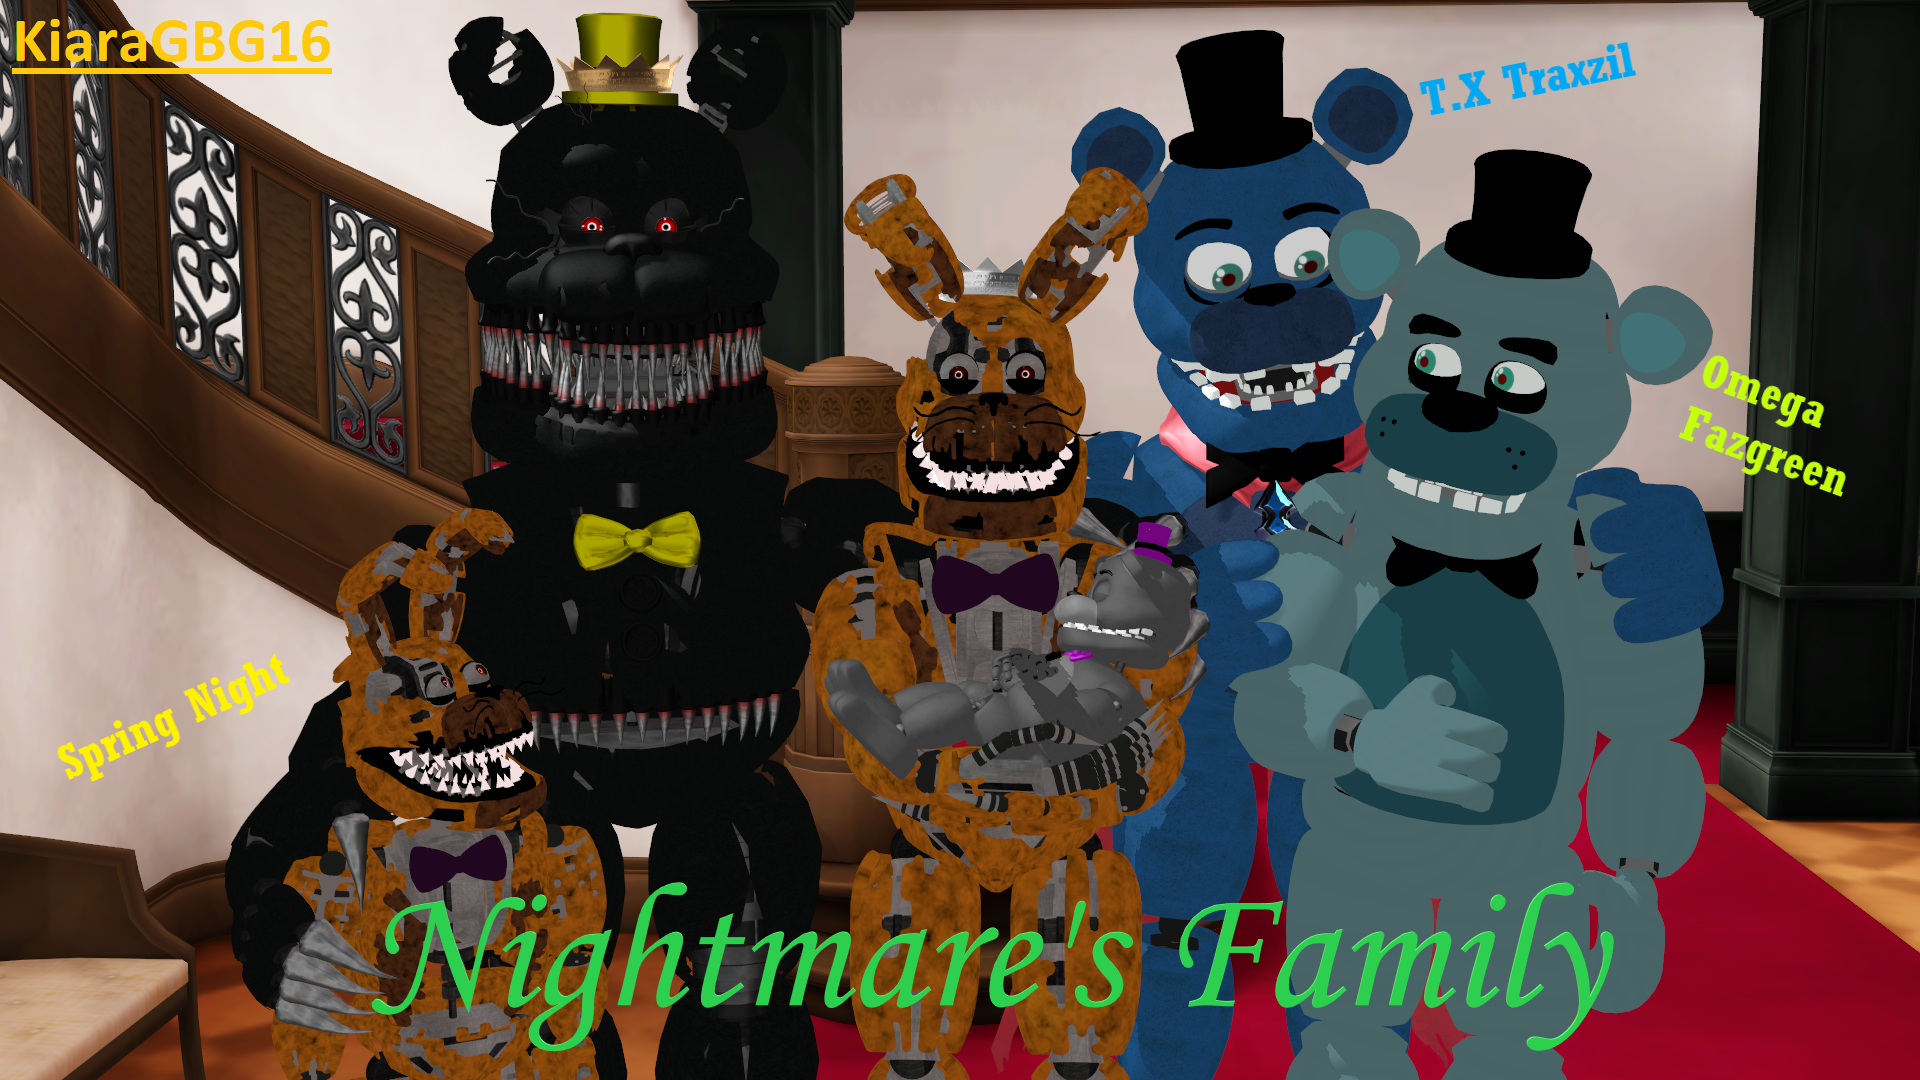 Adventure Nightmare load (FNaF World) by KiaraGBG16 on DeviantArt